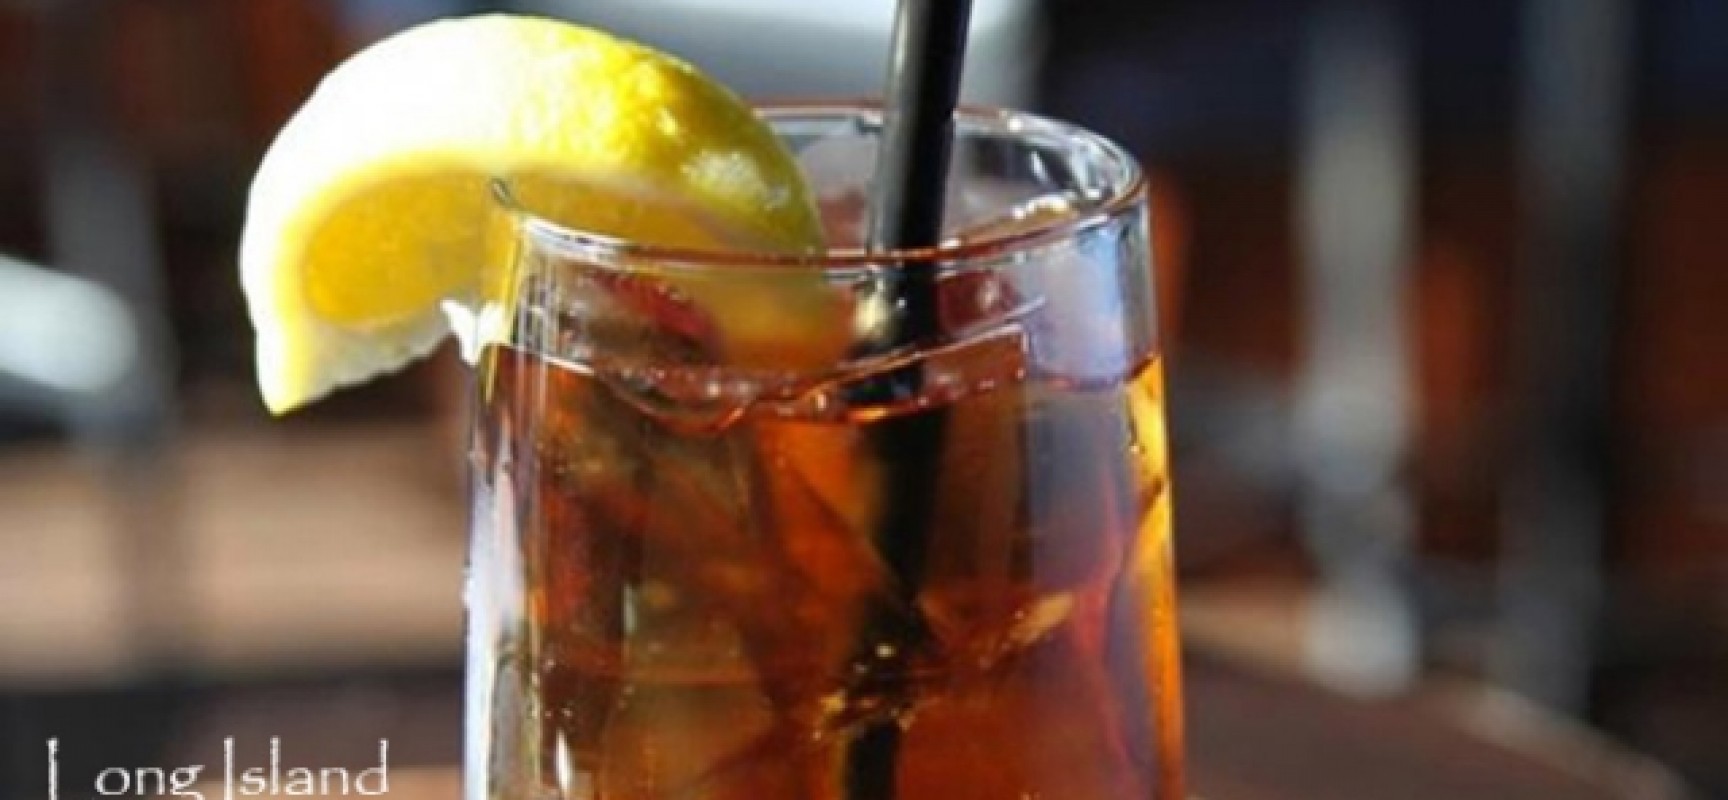 Long Island Ice Tea – A refreshing cocktail